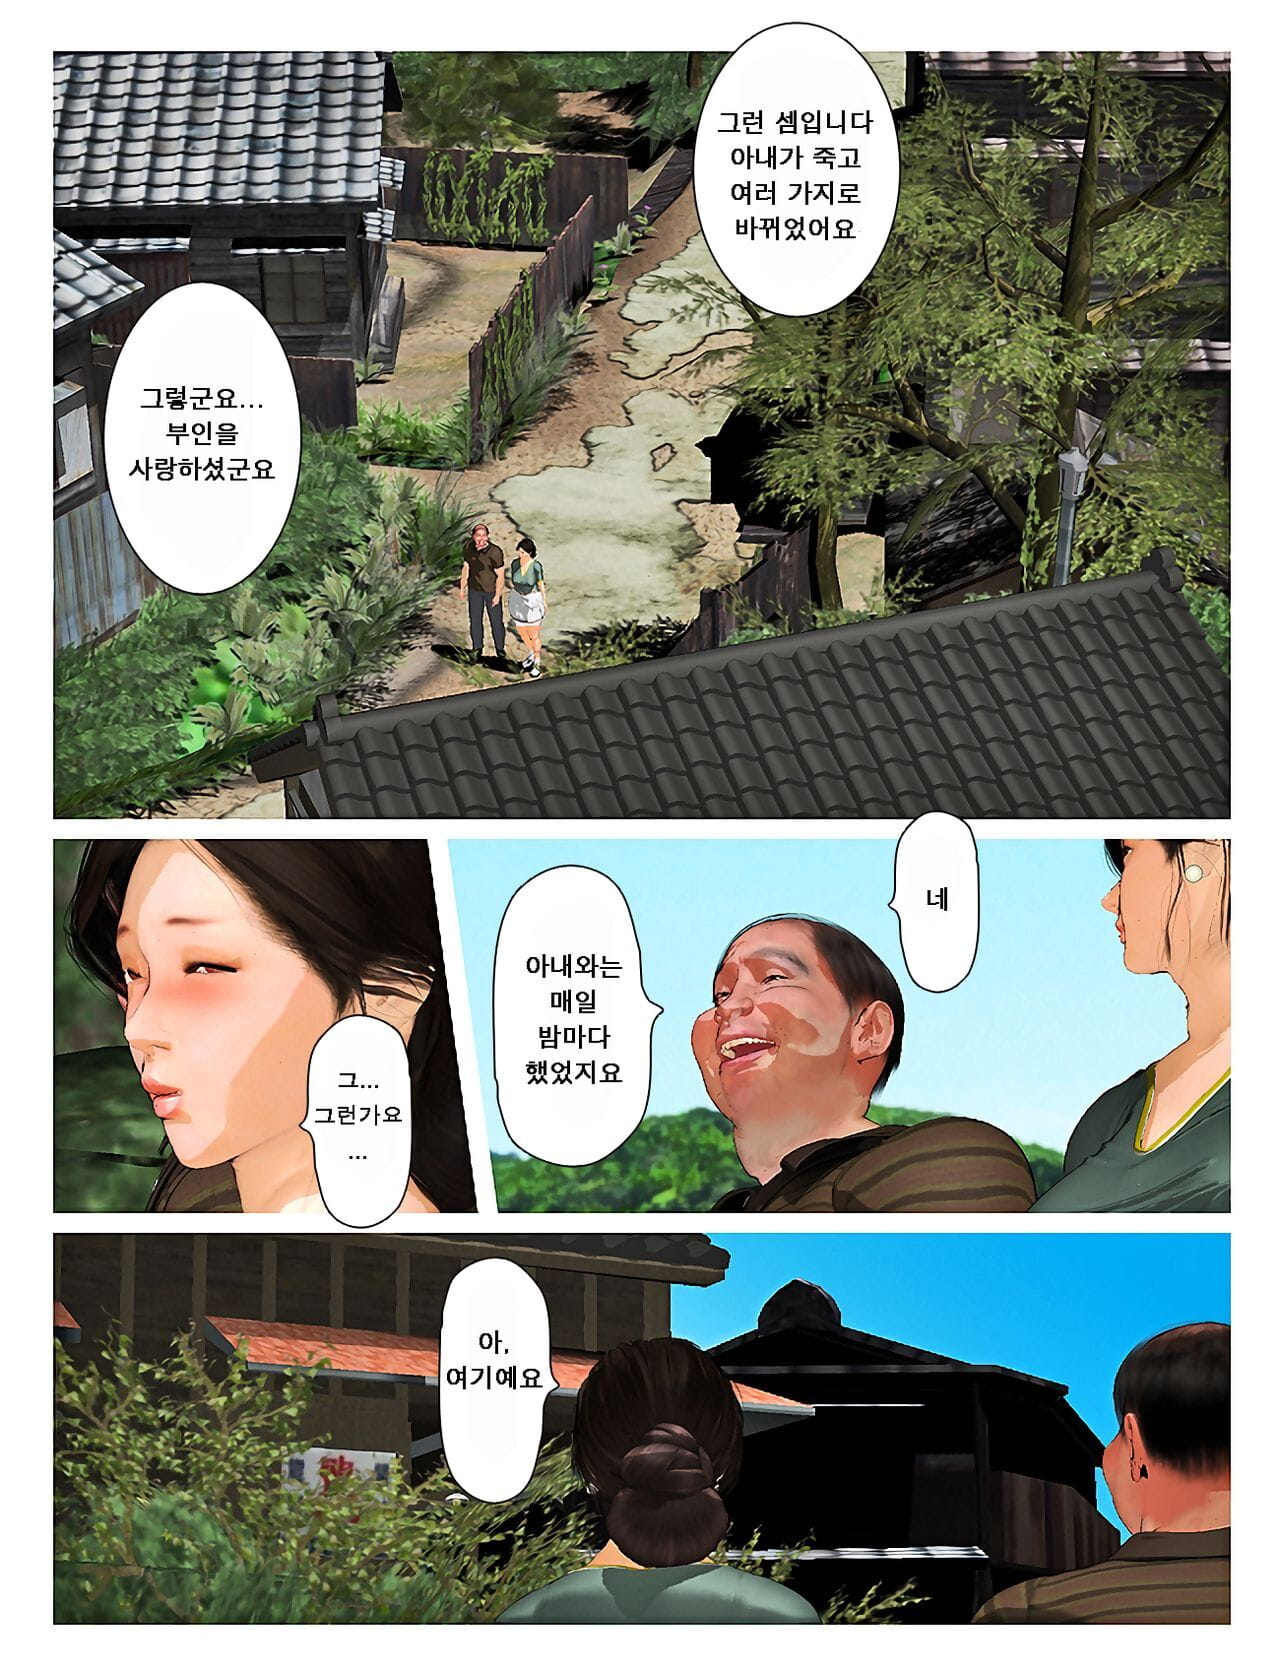 Kyou keine misako san 2019:2 오늘의 미사코씨 2019:2 page 1